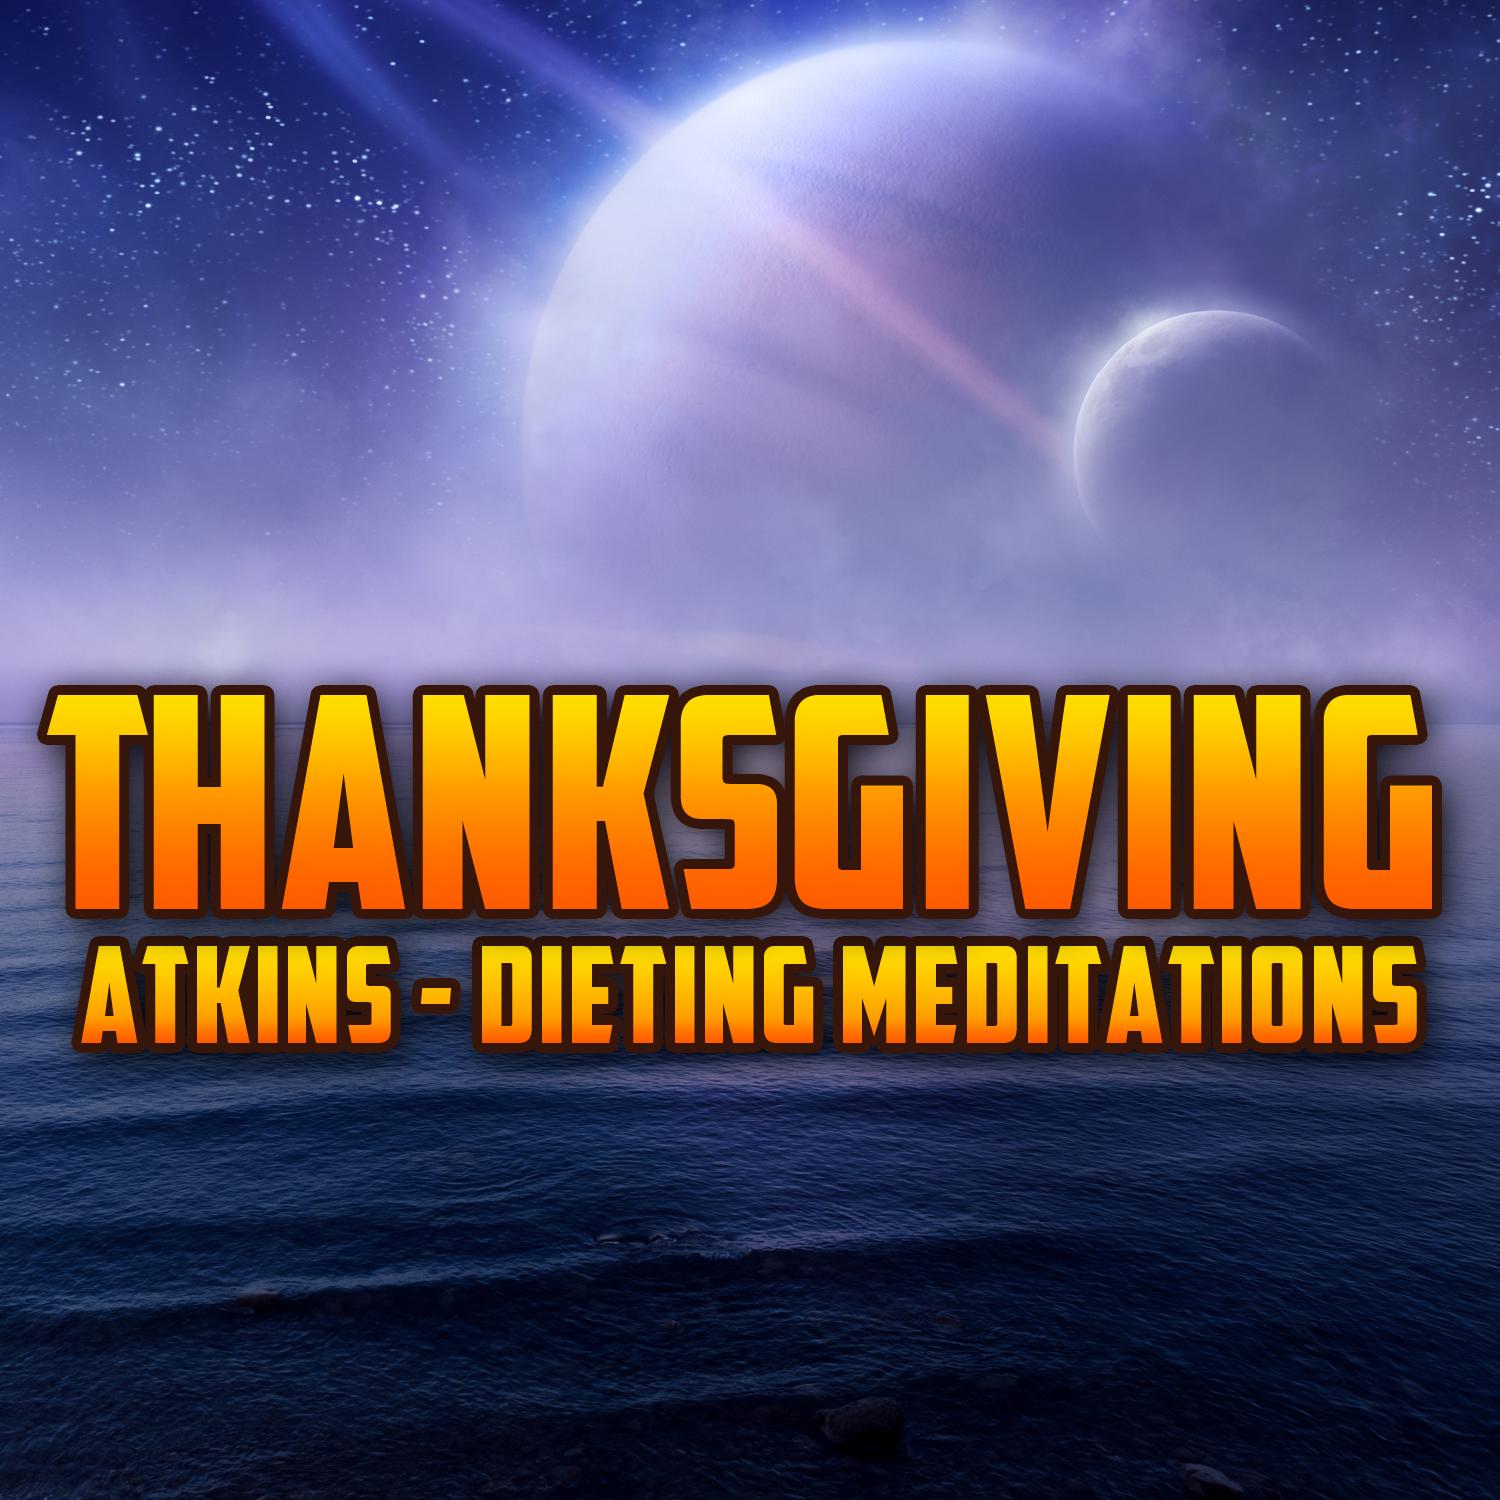 Thanksgiving - Atkins Dieting Meditations